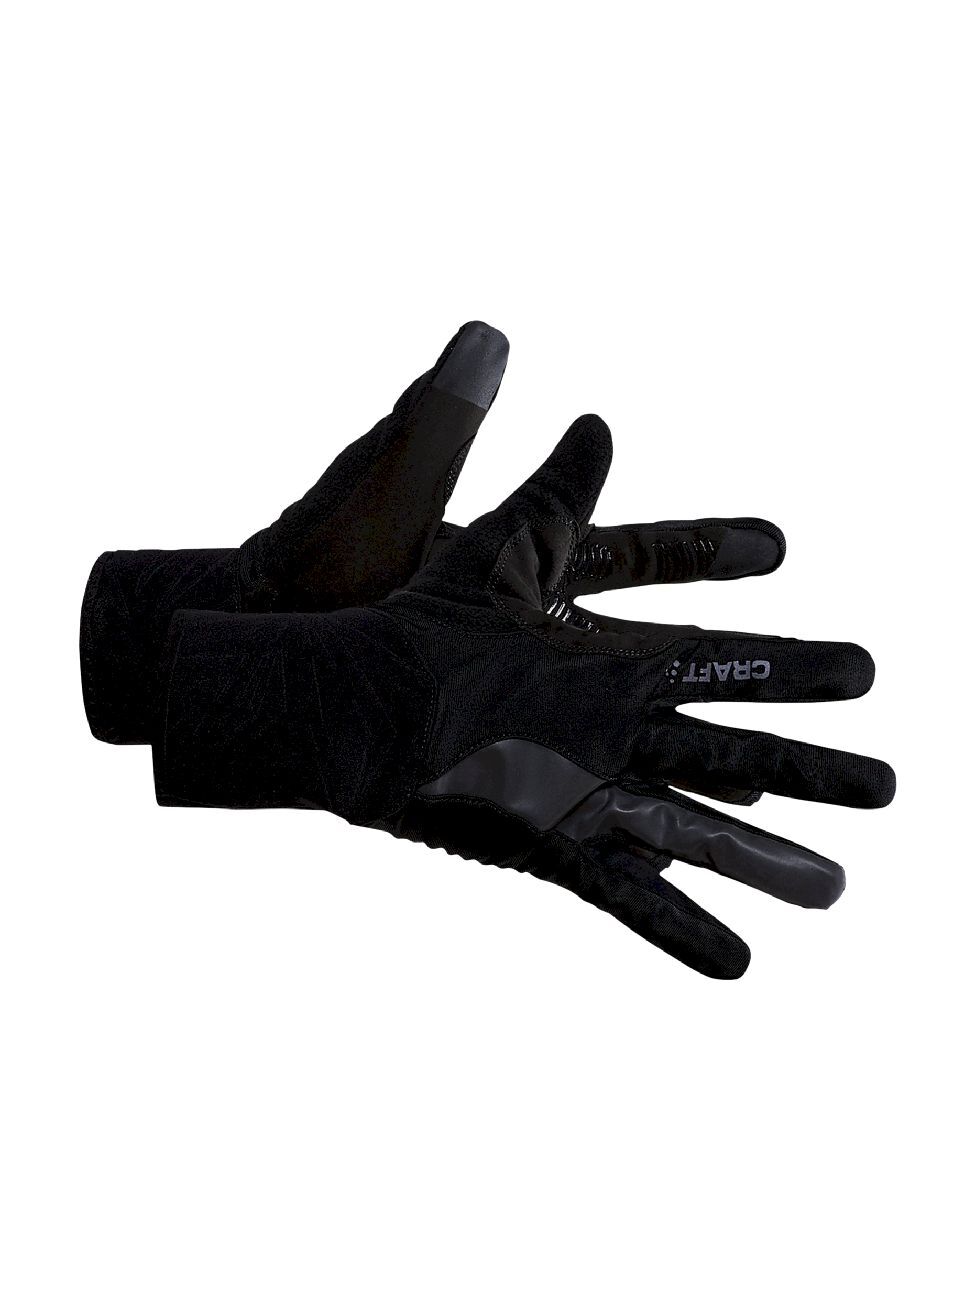 Craft Pro Race Glove - Cross-country ski gloves